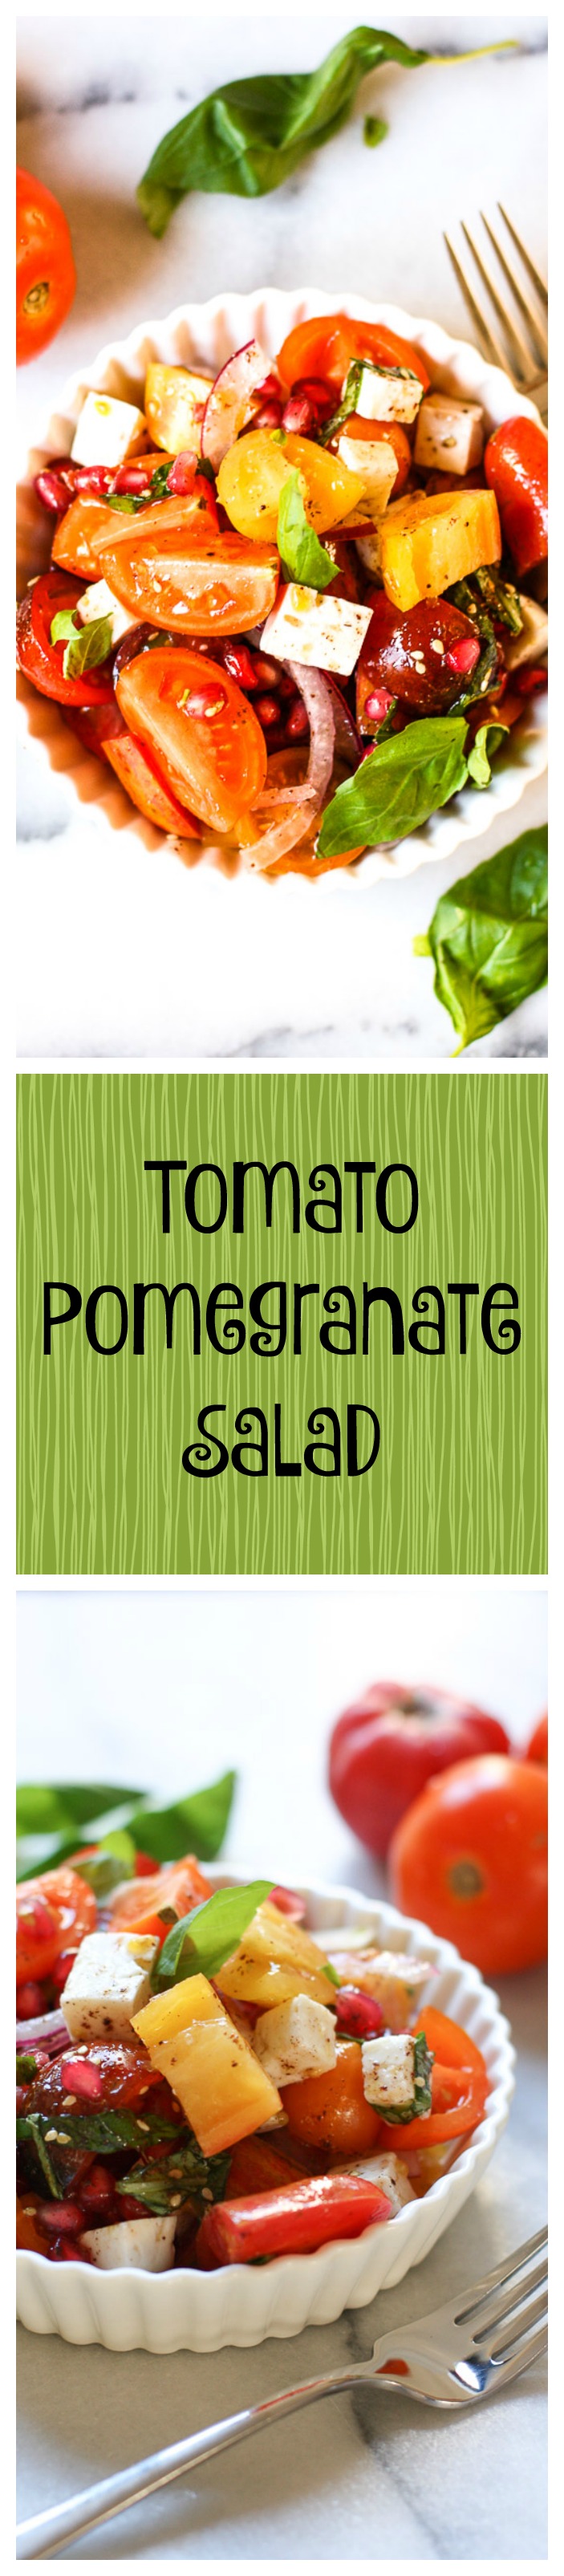 tomato pomegranate salad